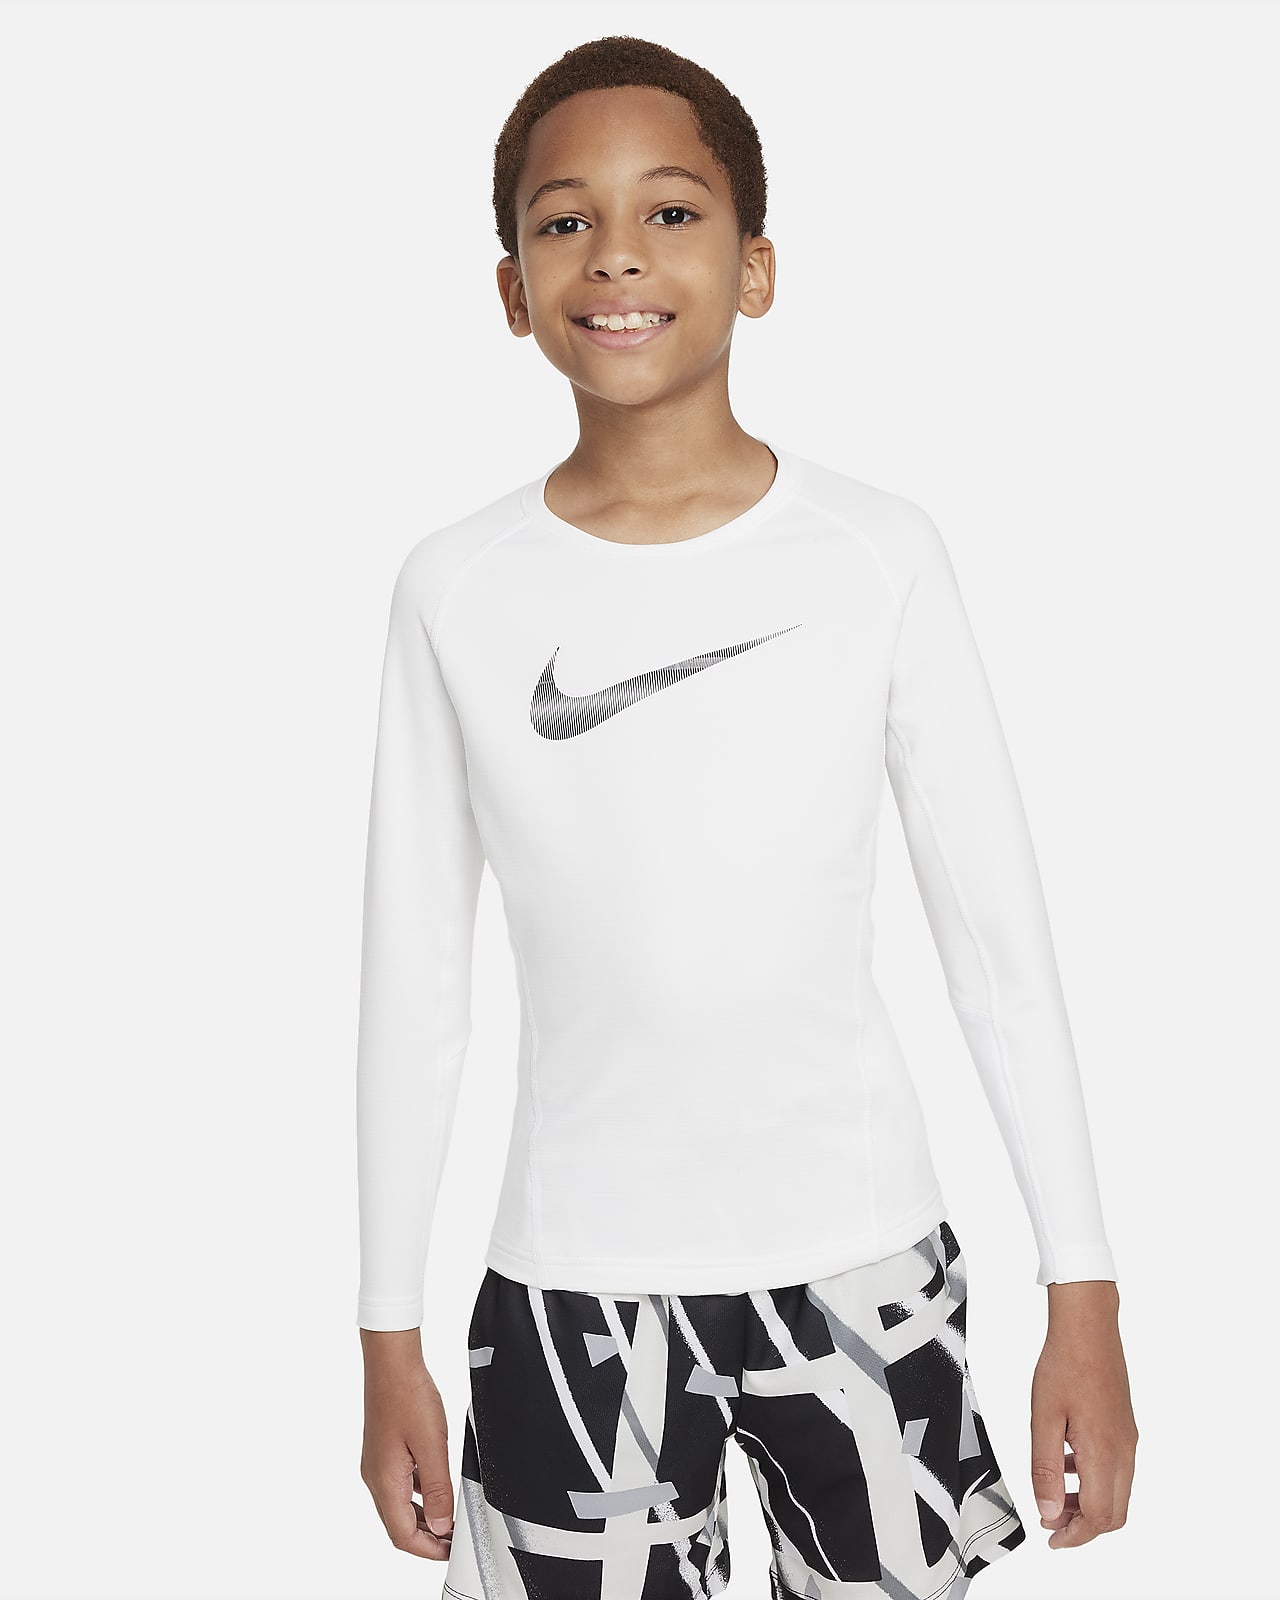 Nike Practice Big Kids' (Boys') Football Jersey